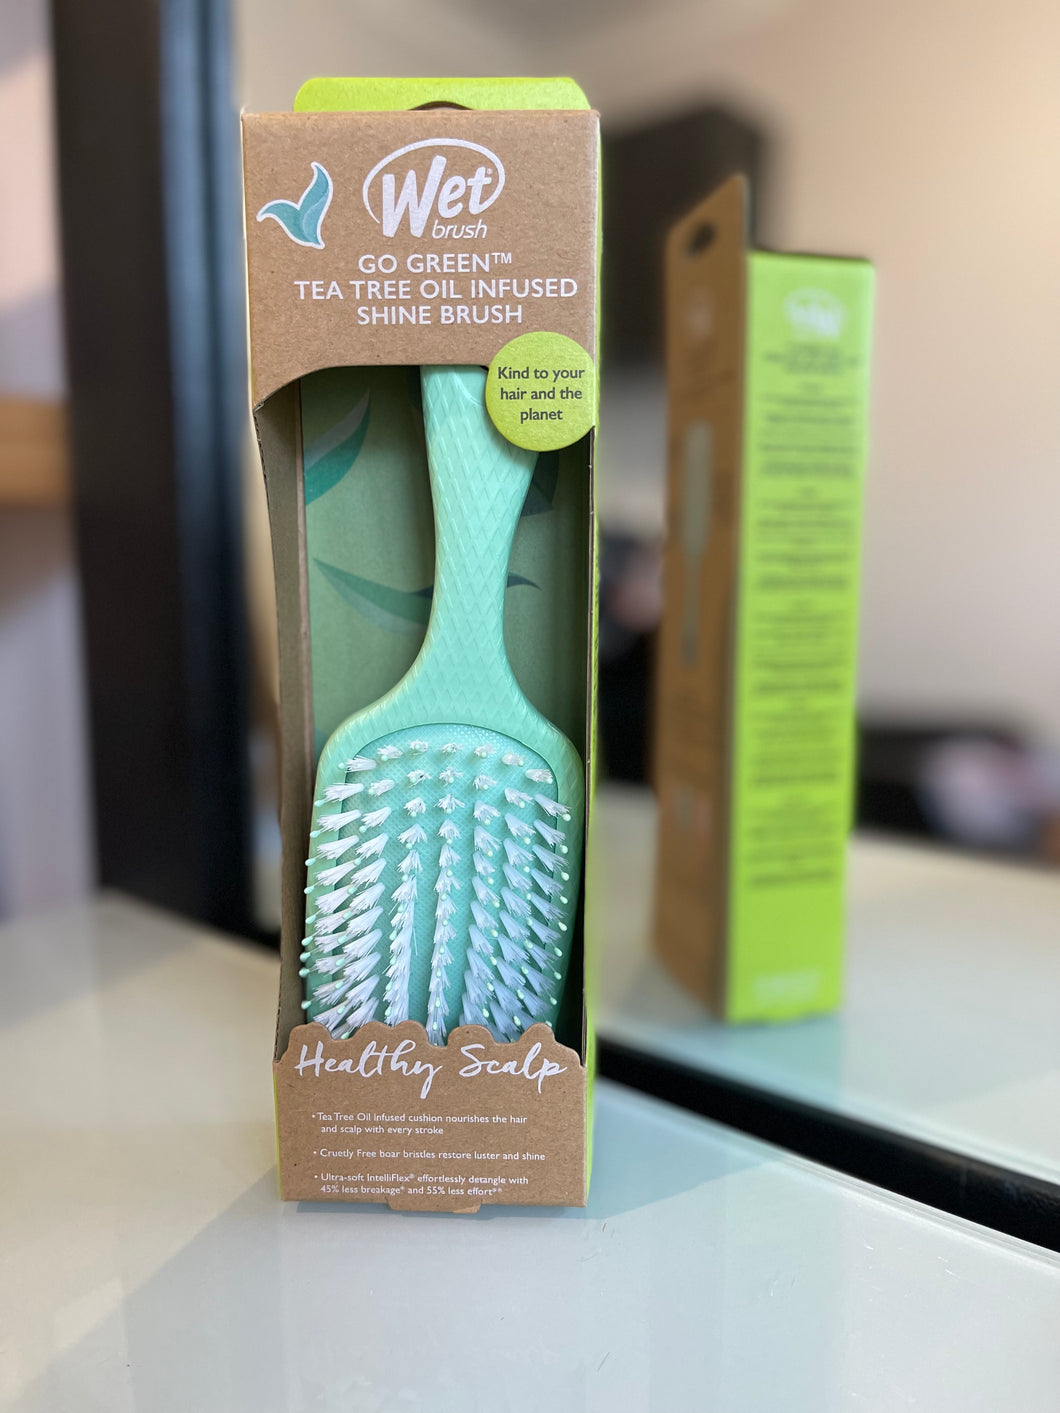 Go green infused Wetbrush